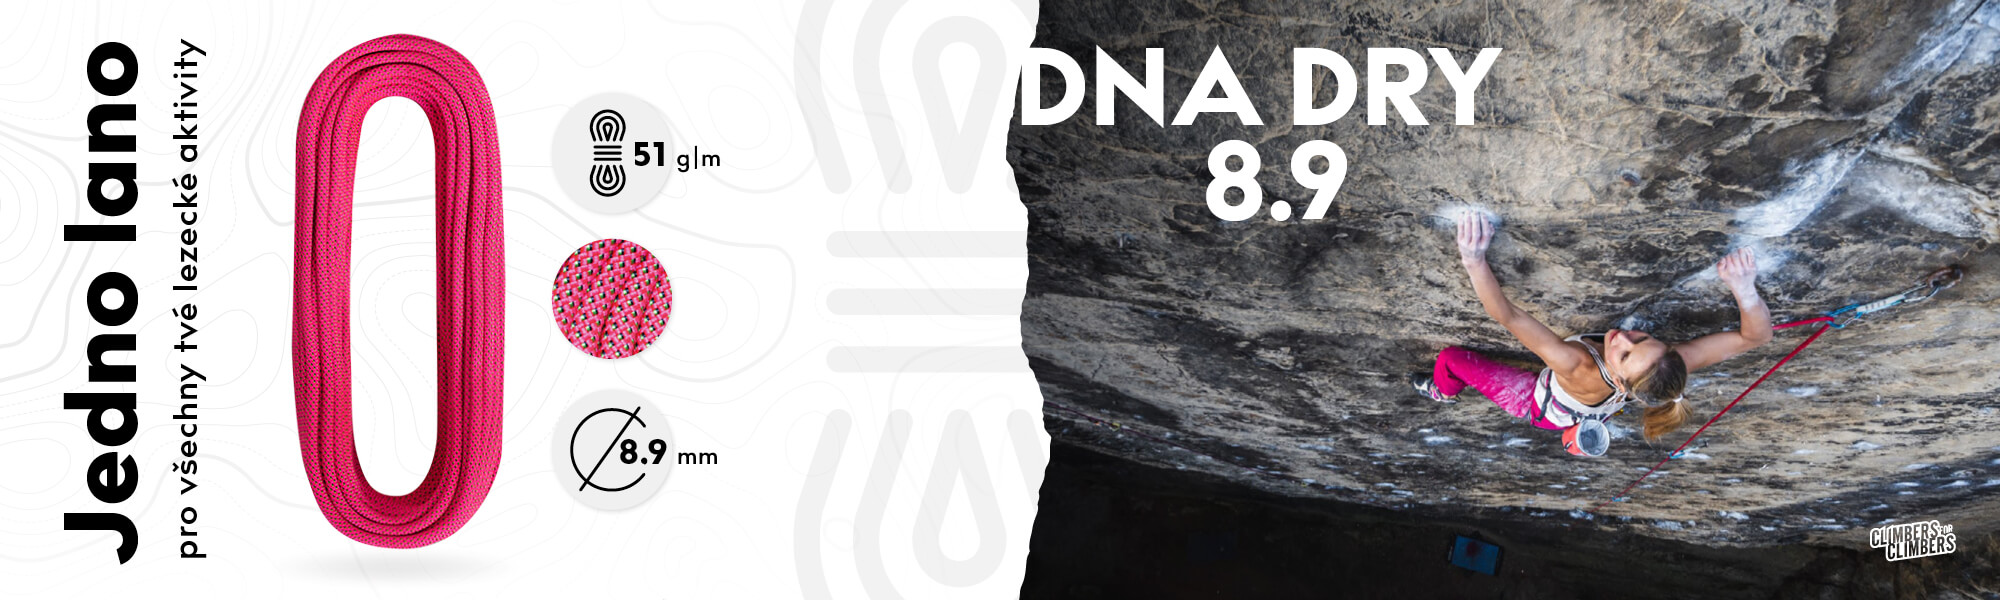 DNA DRY 8.9